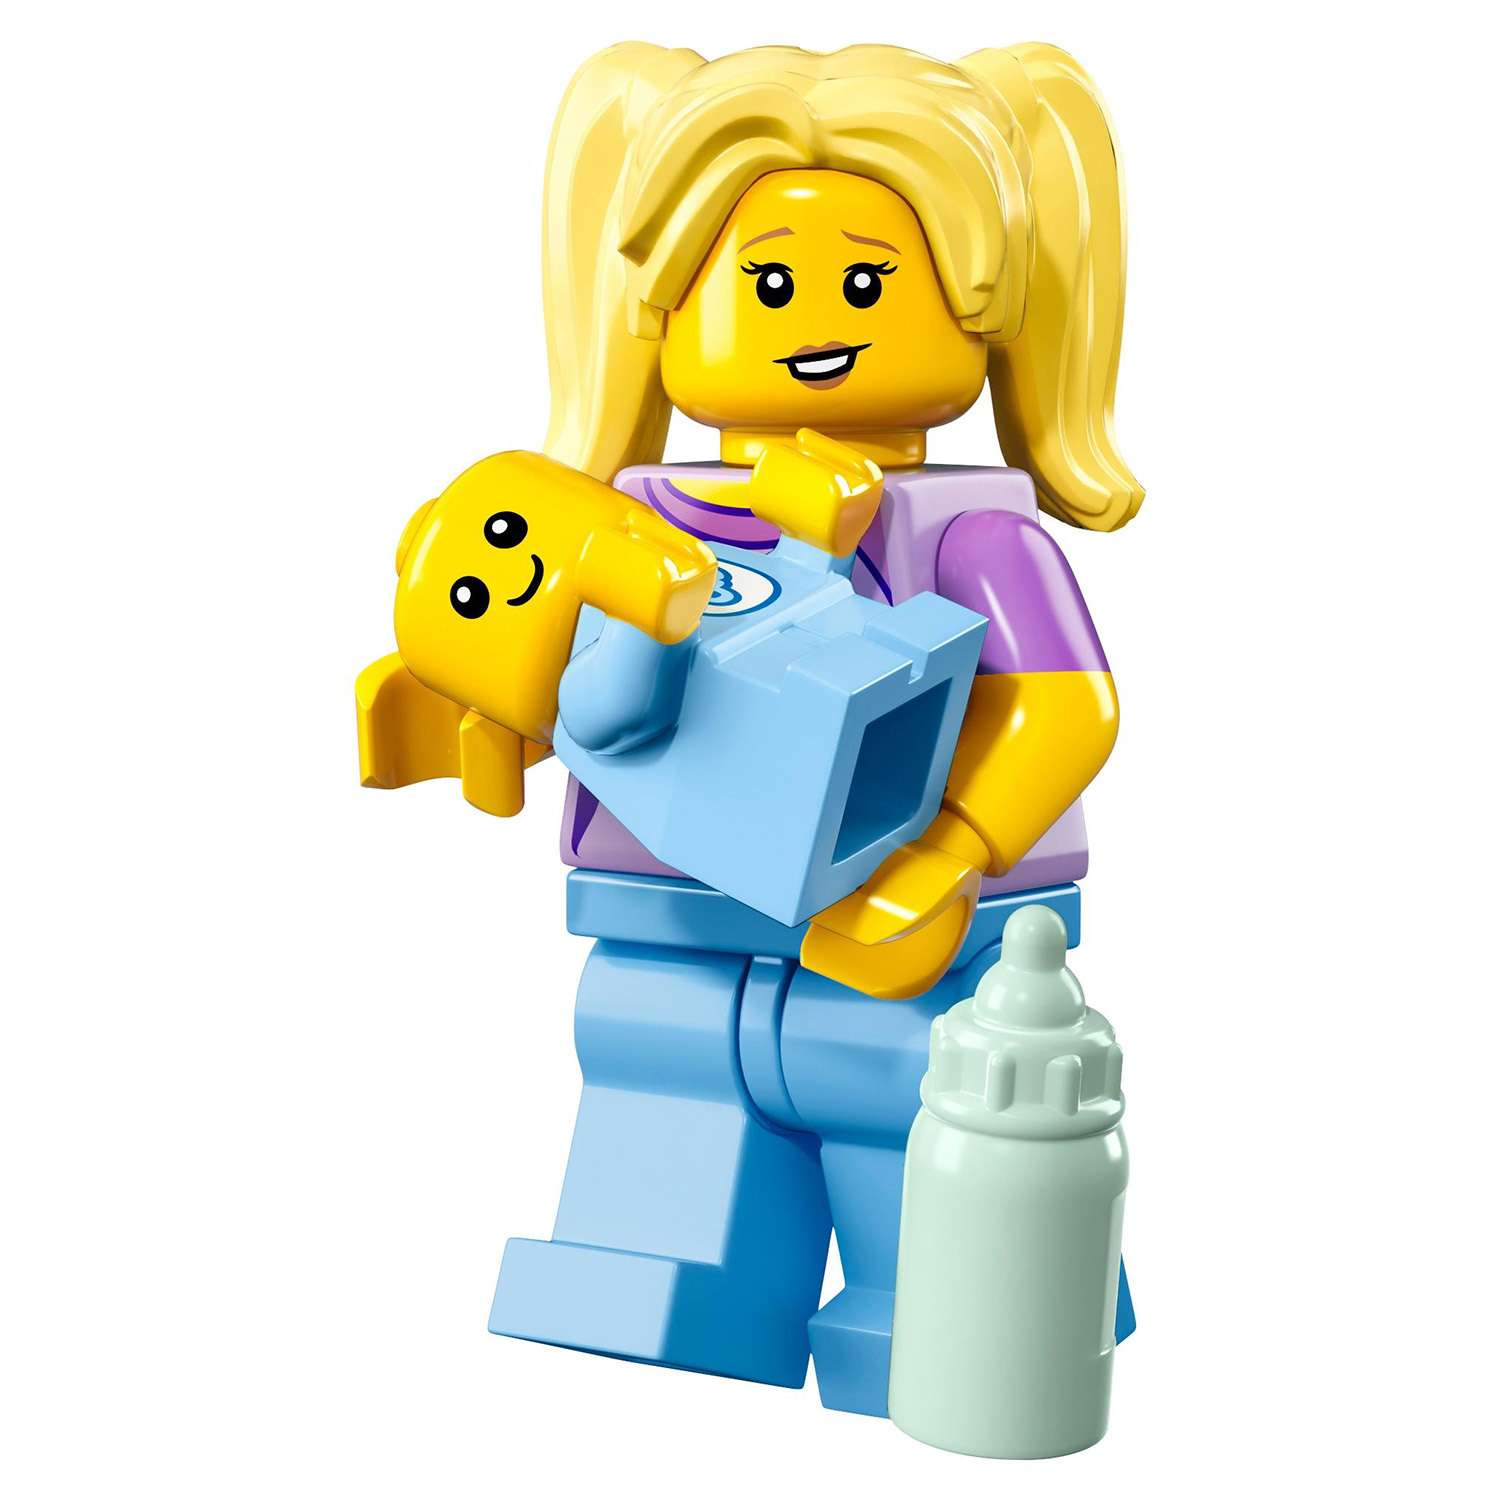 Конструктор LEGO Minifigures Confidential Minifigures Sept. 2016 (71013) - фото 17